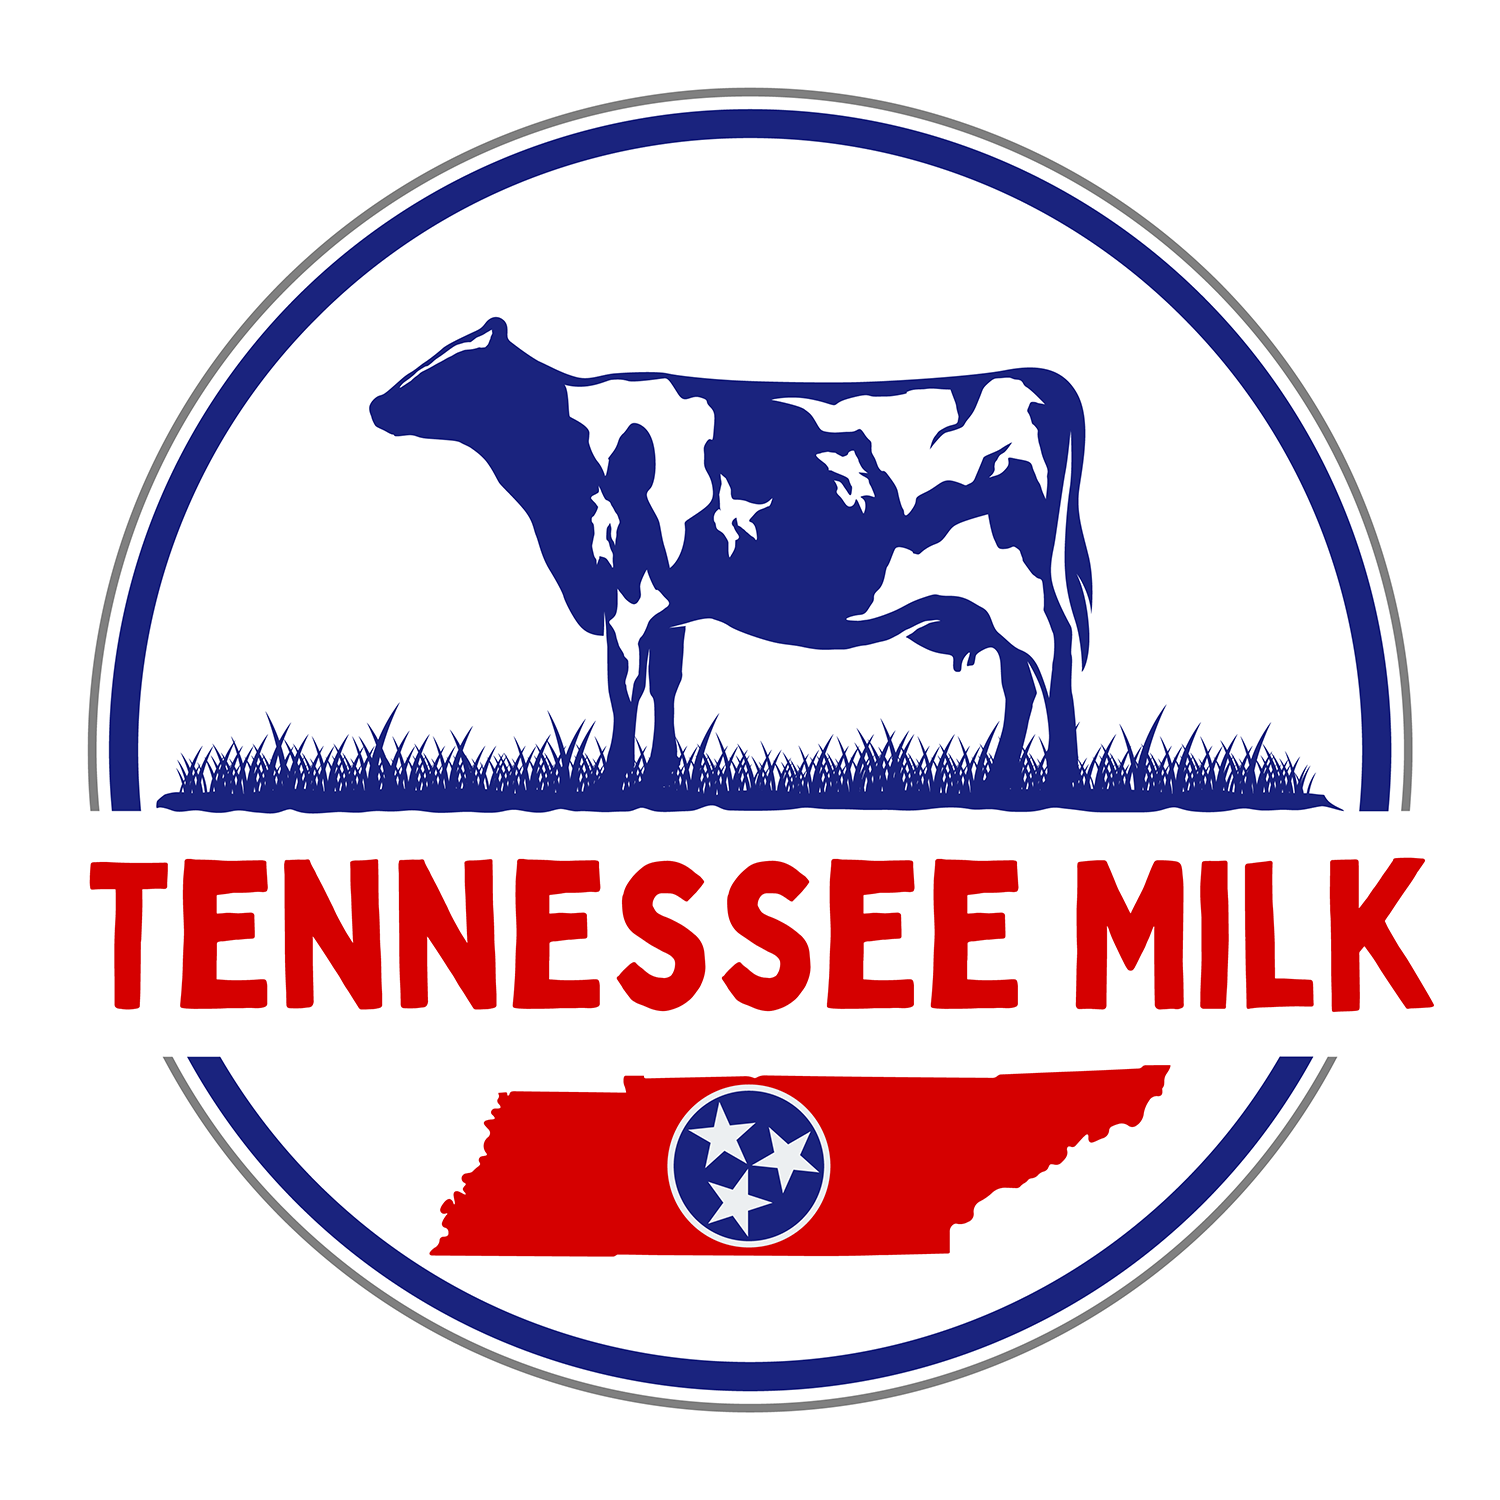 Tennessee Milk logo